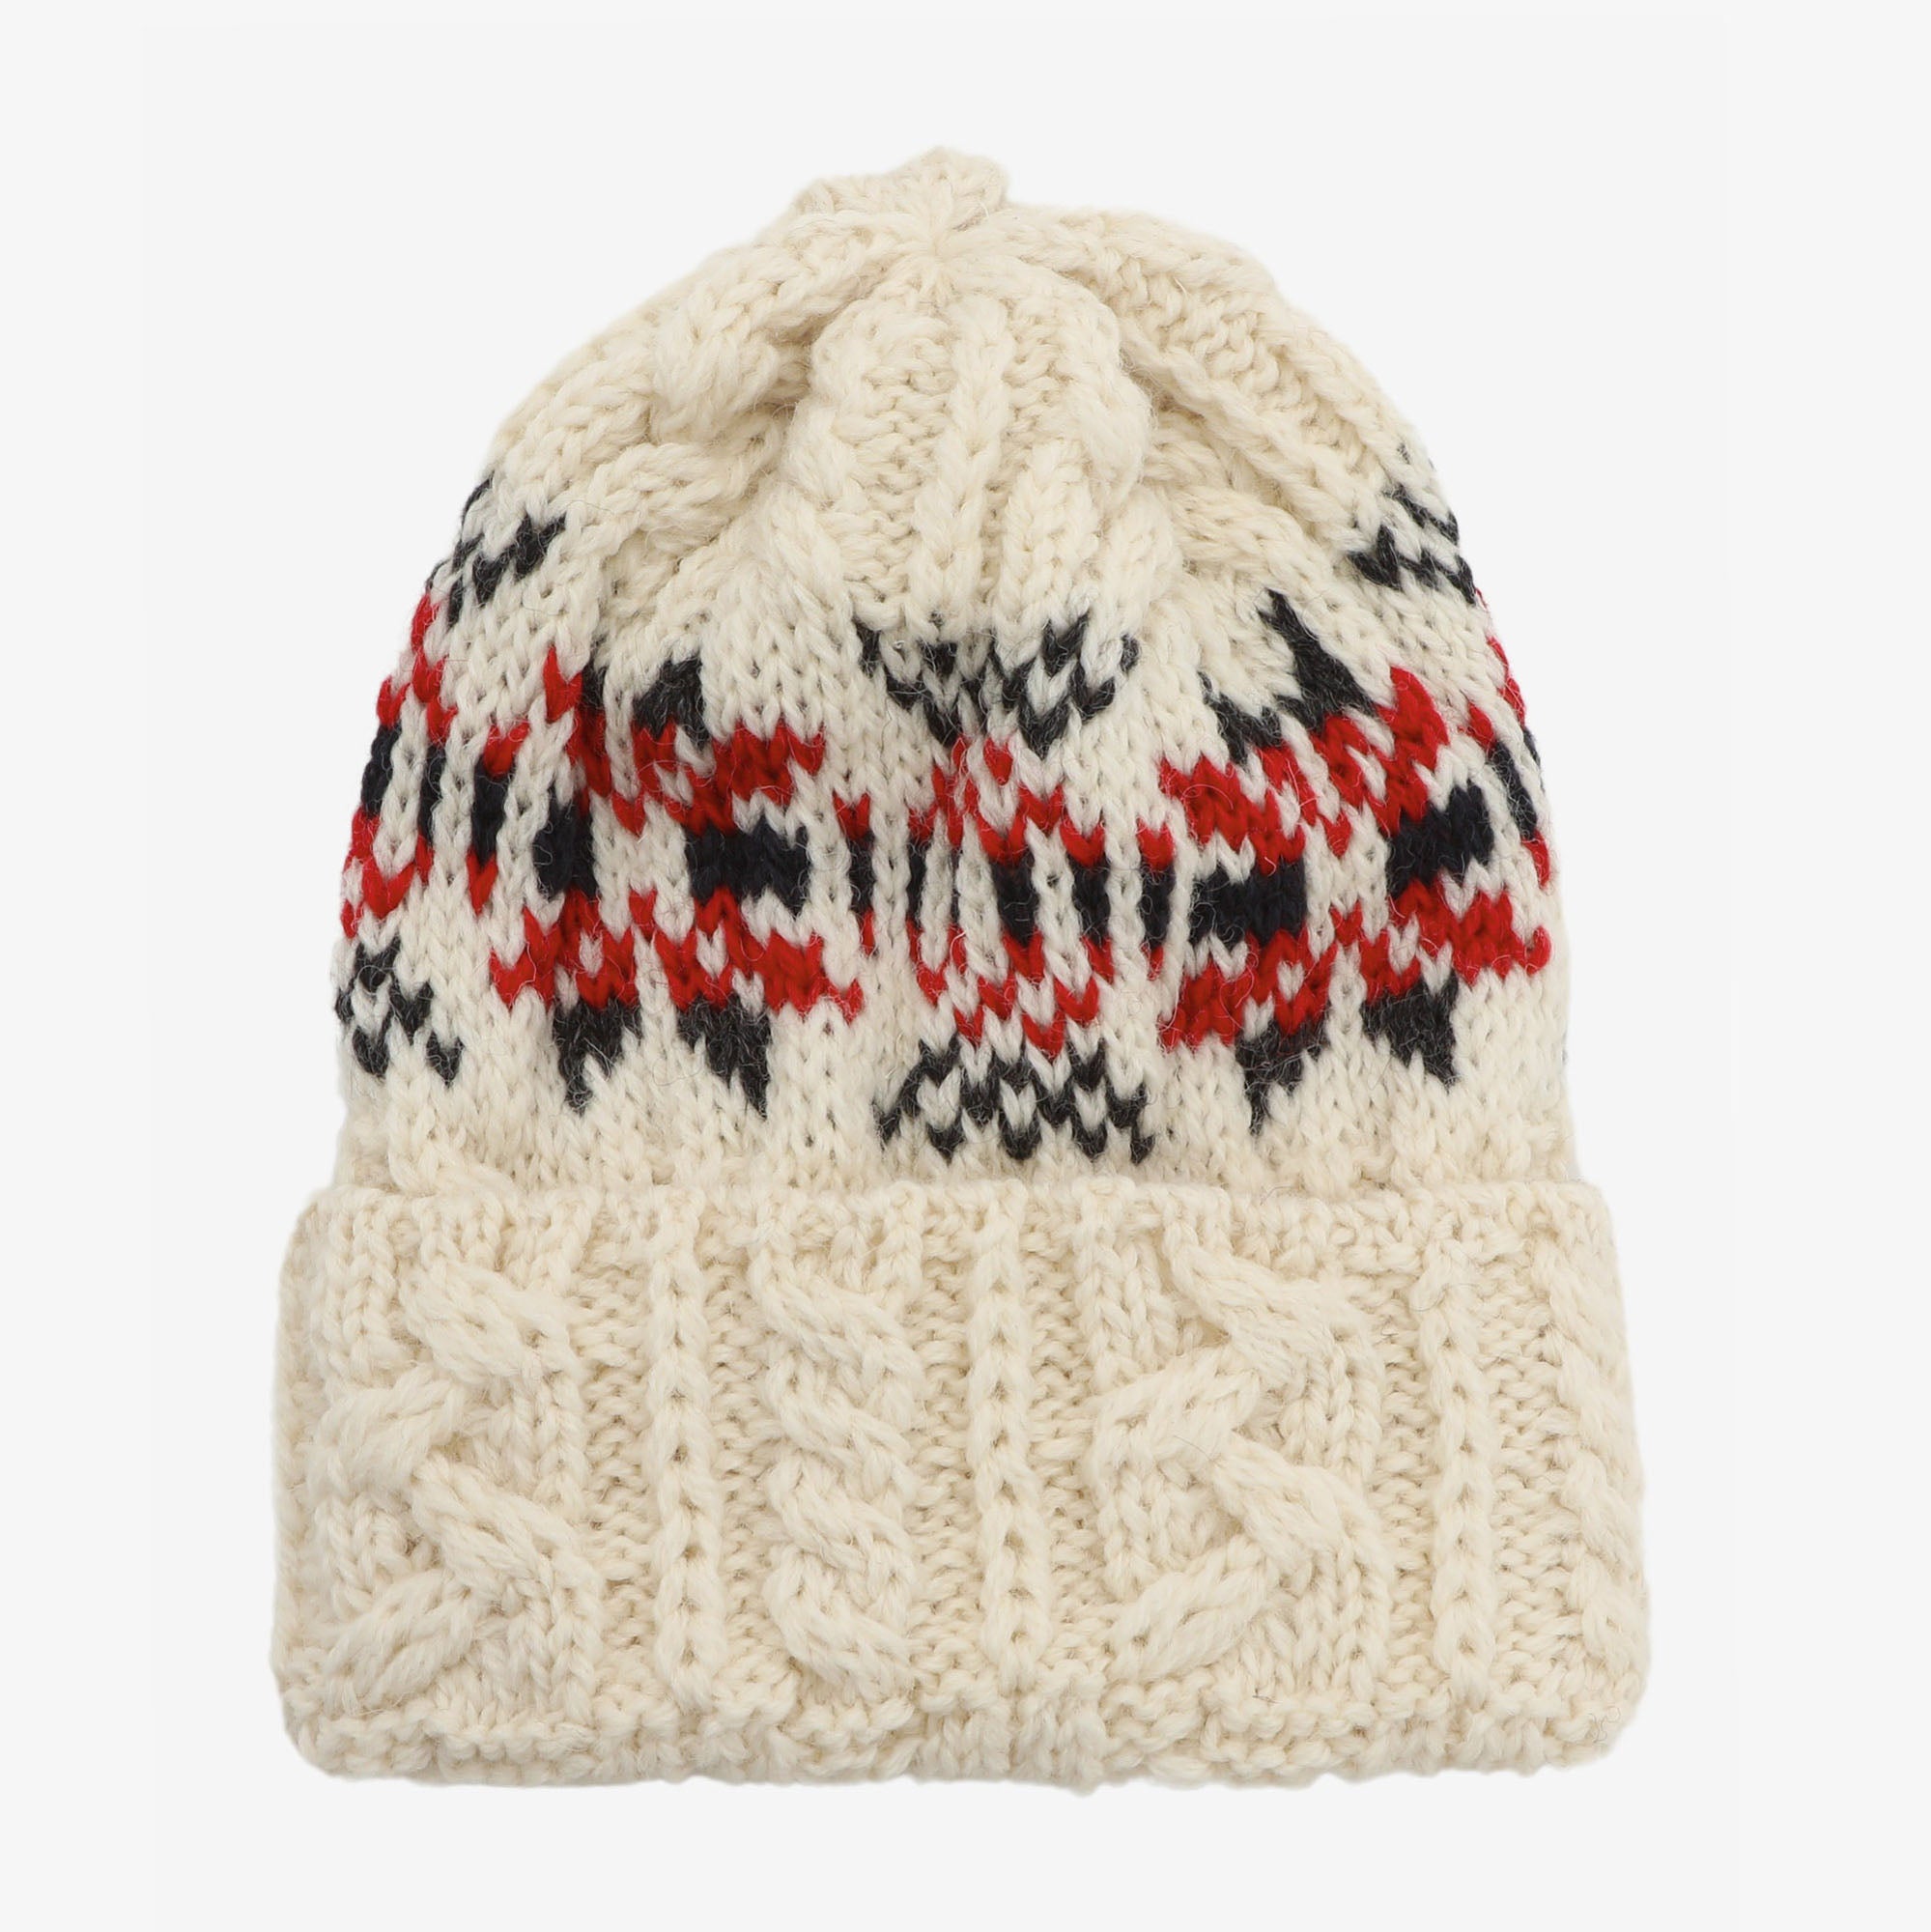 Cable Knit Snowflake Hat - Ecru